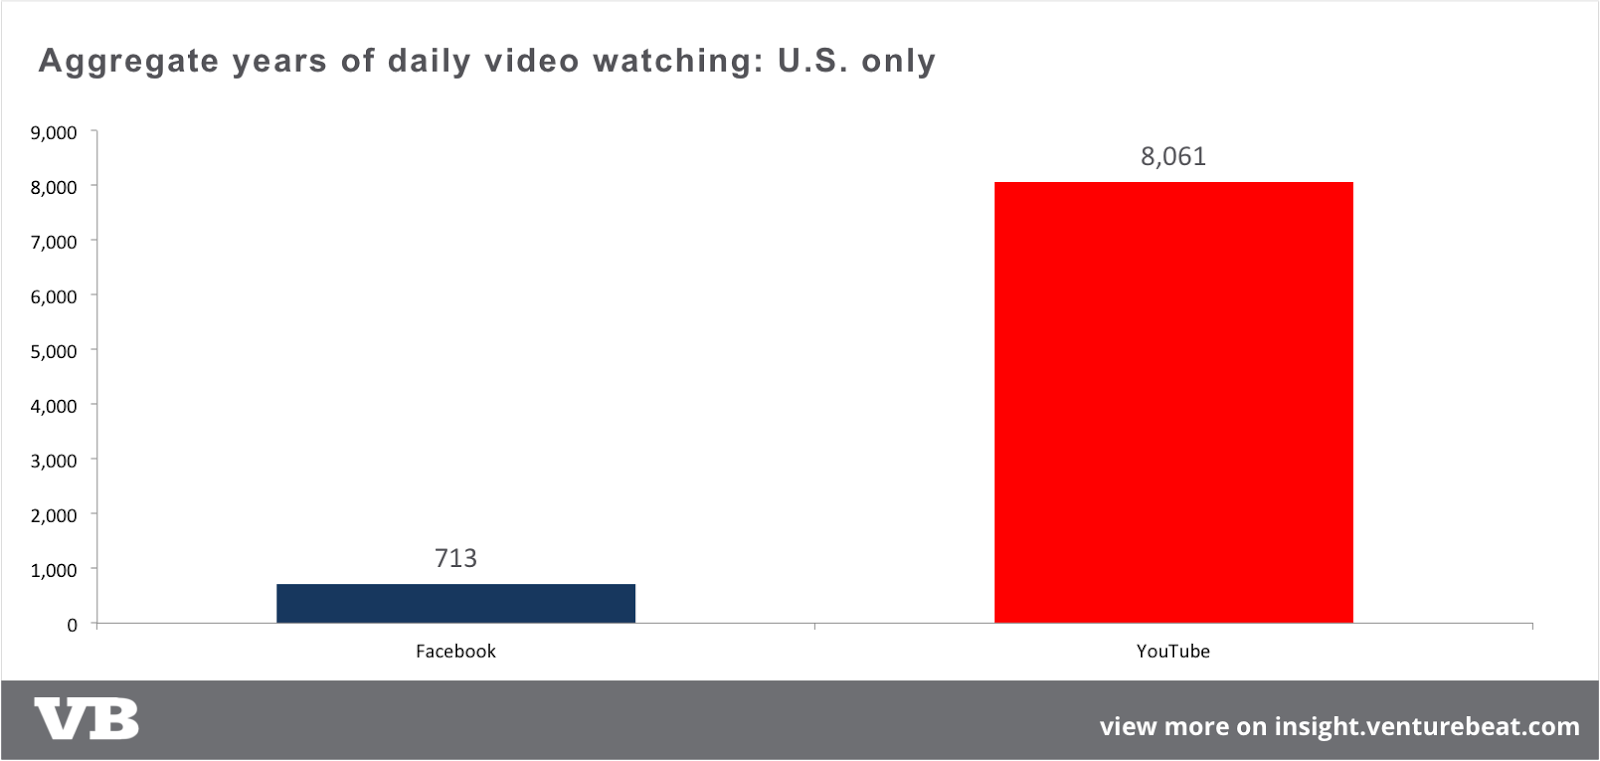 YouTube vs Facebook: digital video